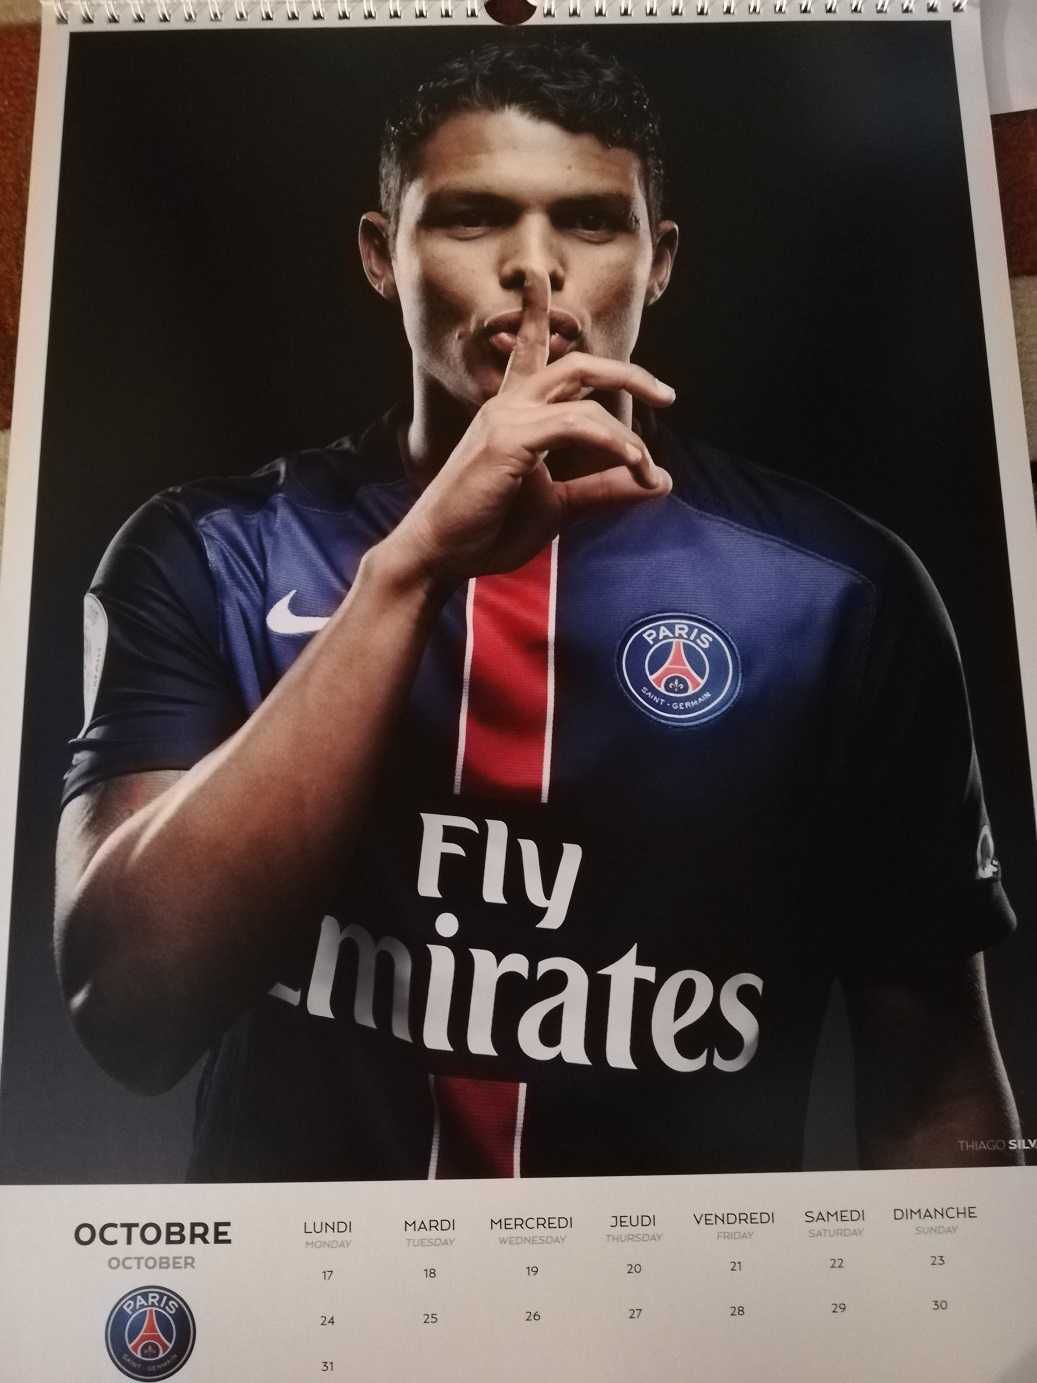 Oryginalny kalendarz klubu Paris St. Germain 2016